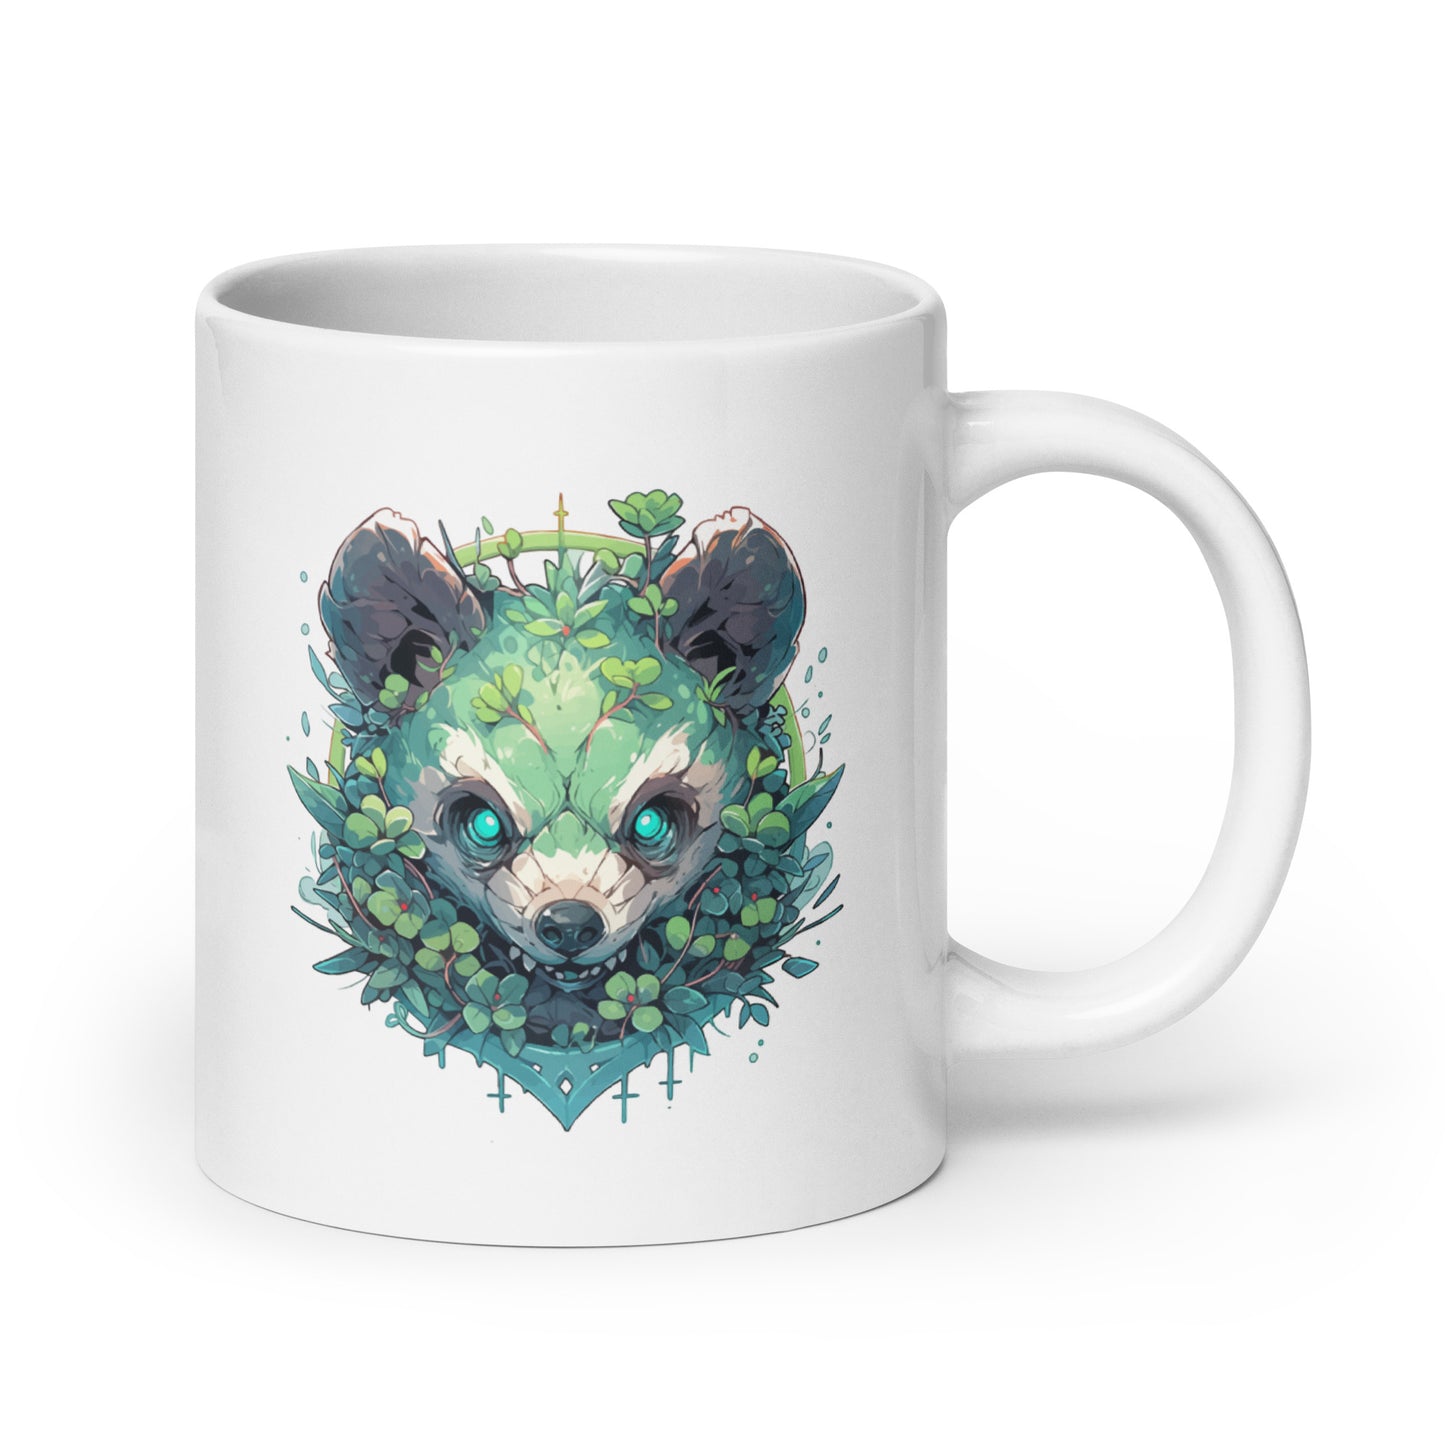 Angry panda mutant, Bamboo bear in jungle, Black and white bear, Leaves and blue eyes animal wild - White glossy mug